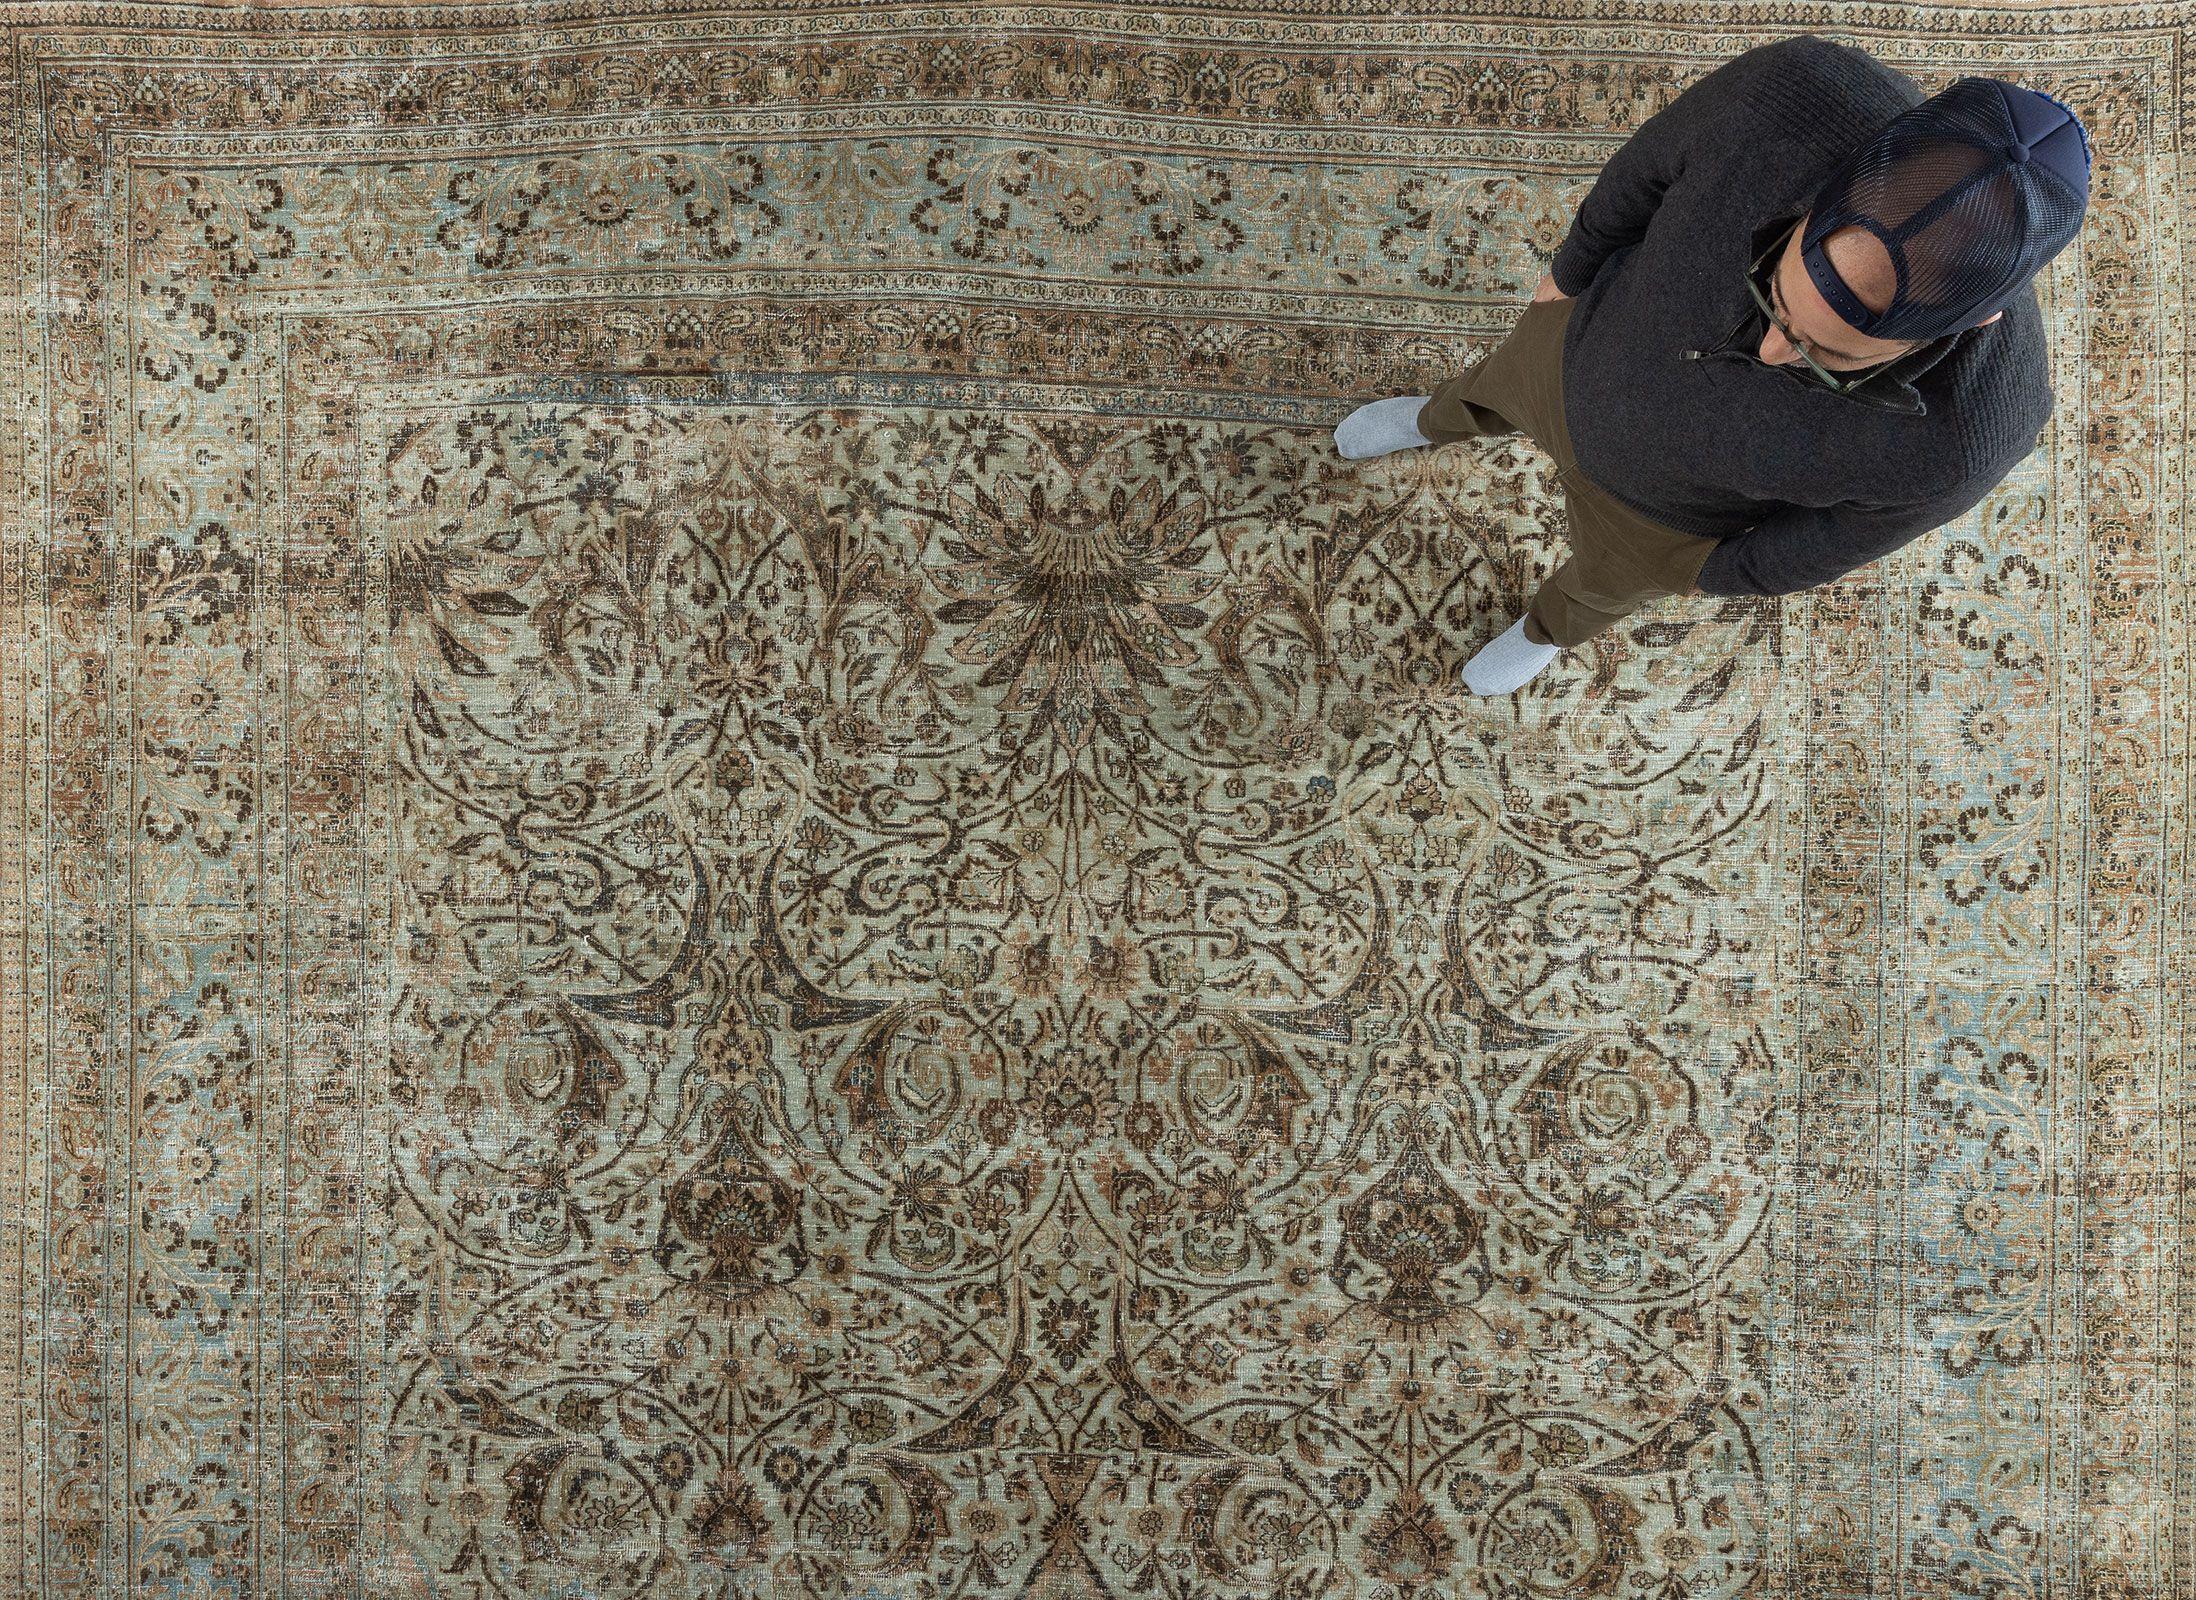 Zabihi Collection Antique Worn Persian Oversize Carpet For Sale 11